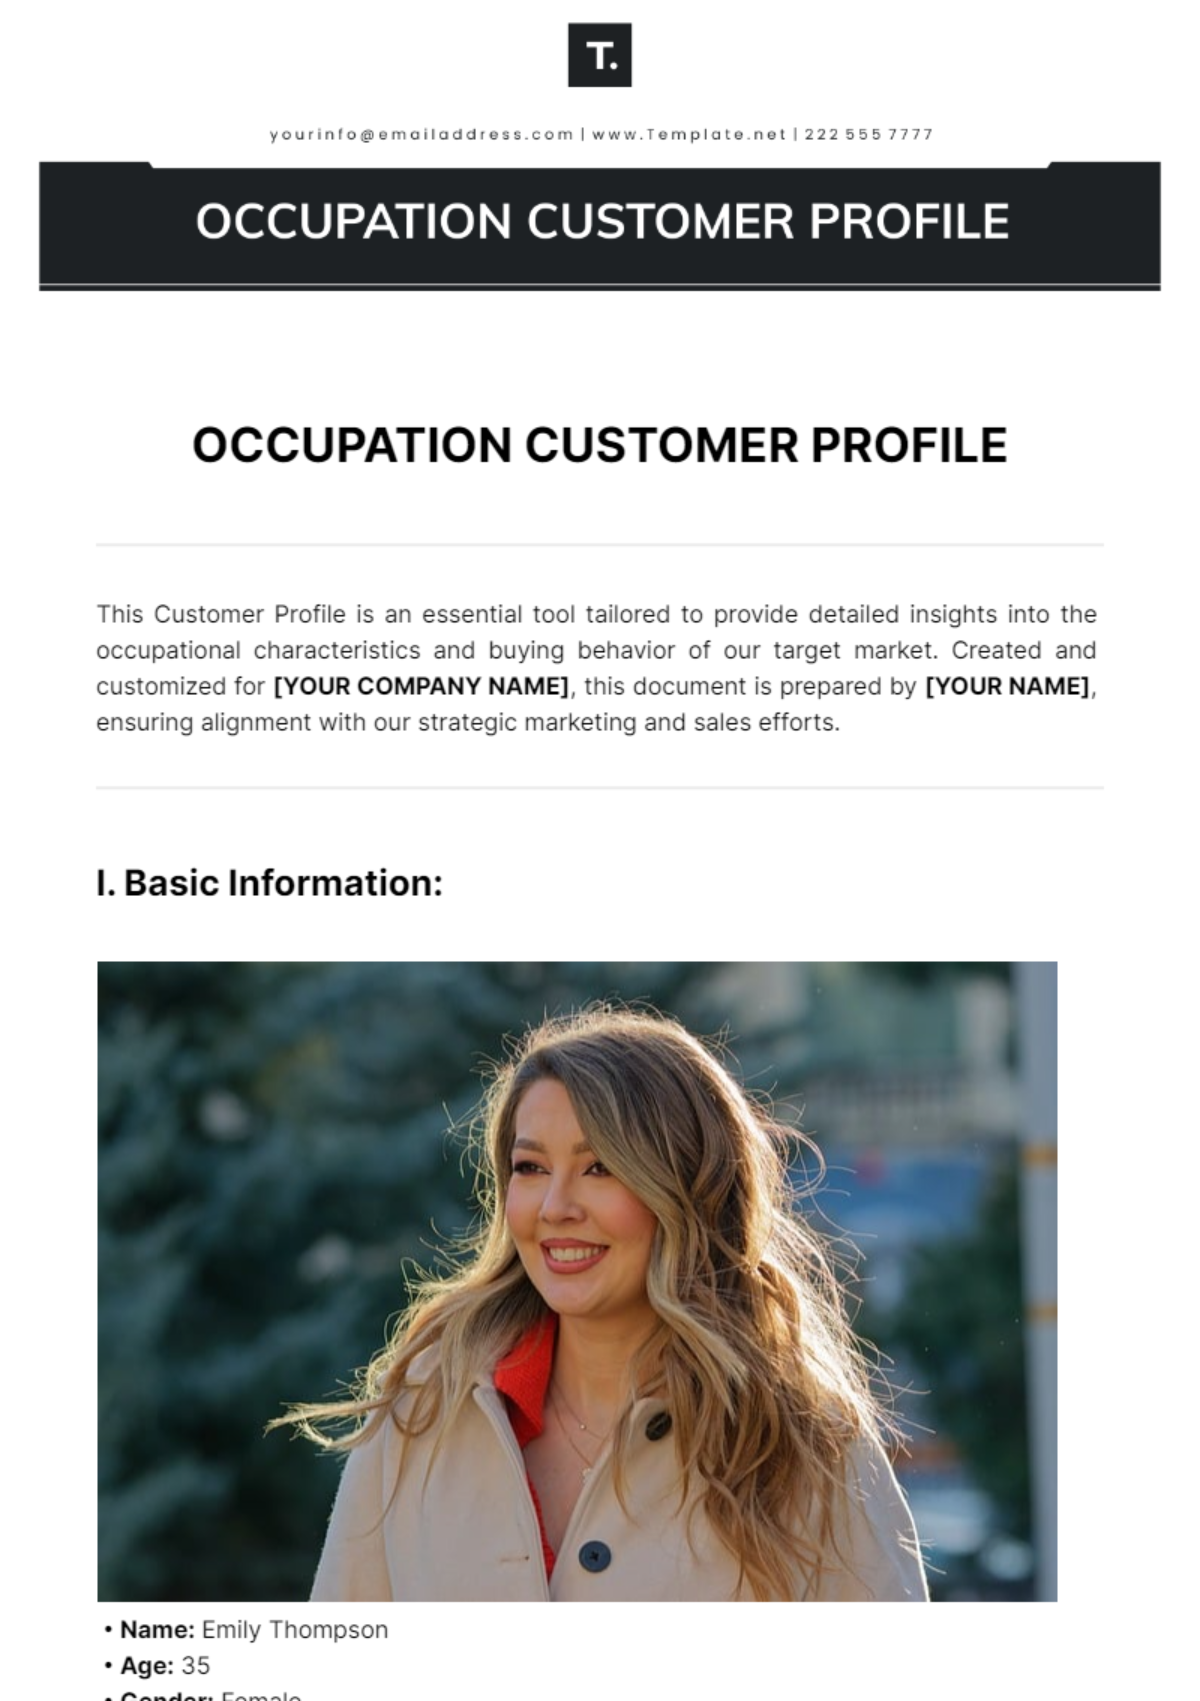 Occupation Customer Profile Template